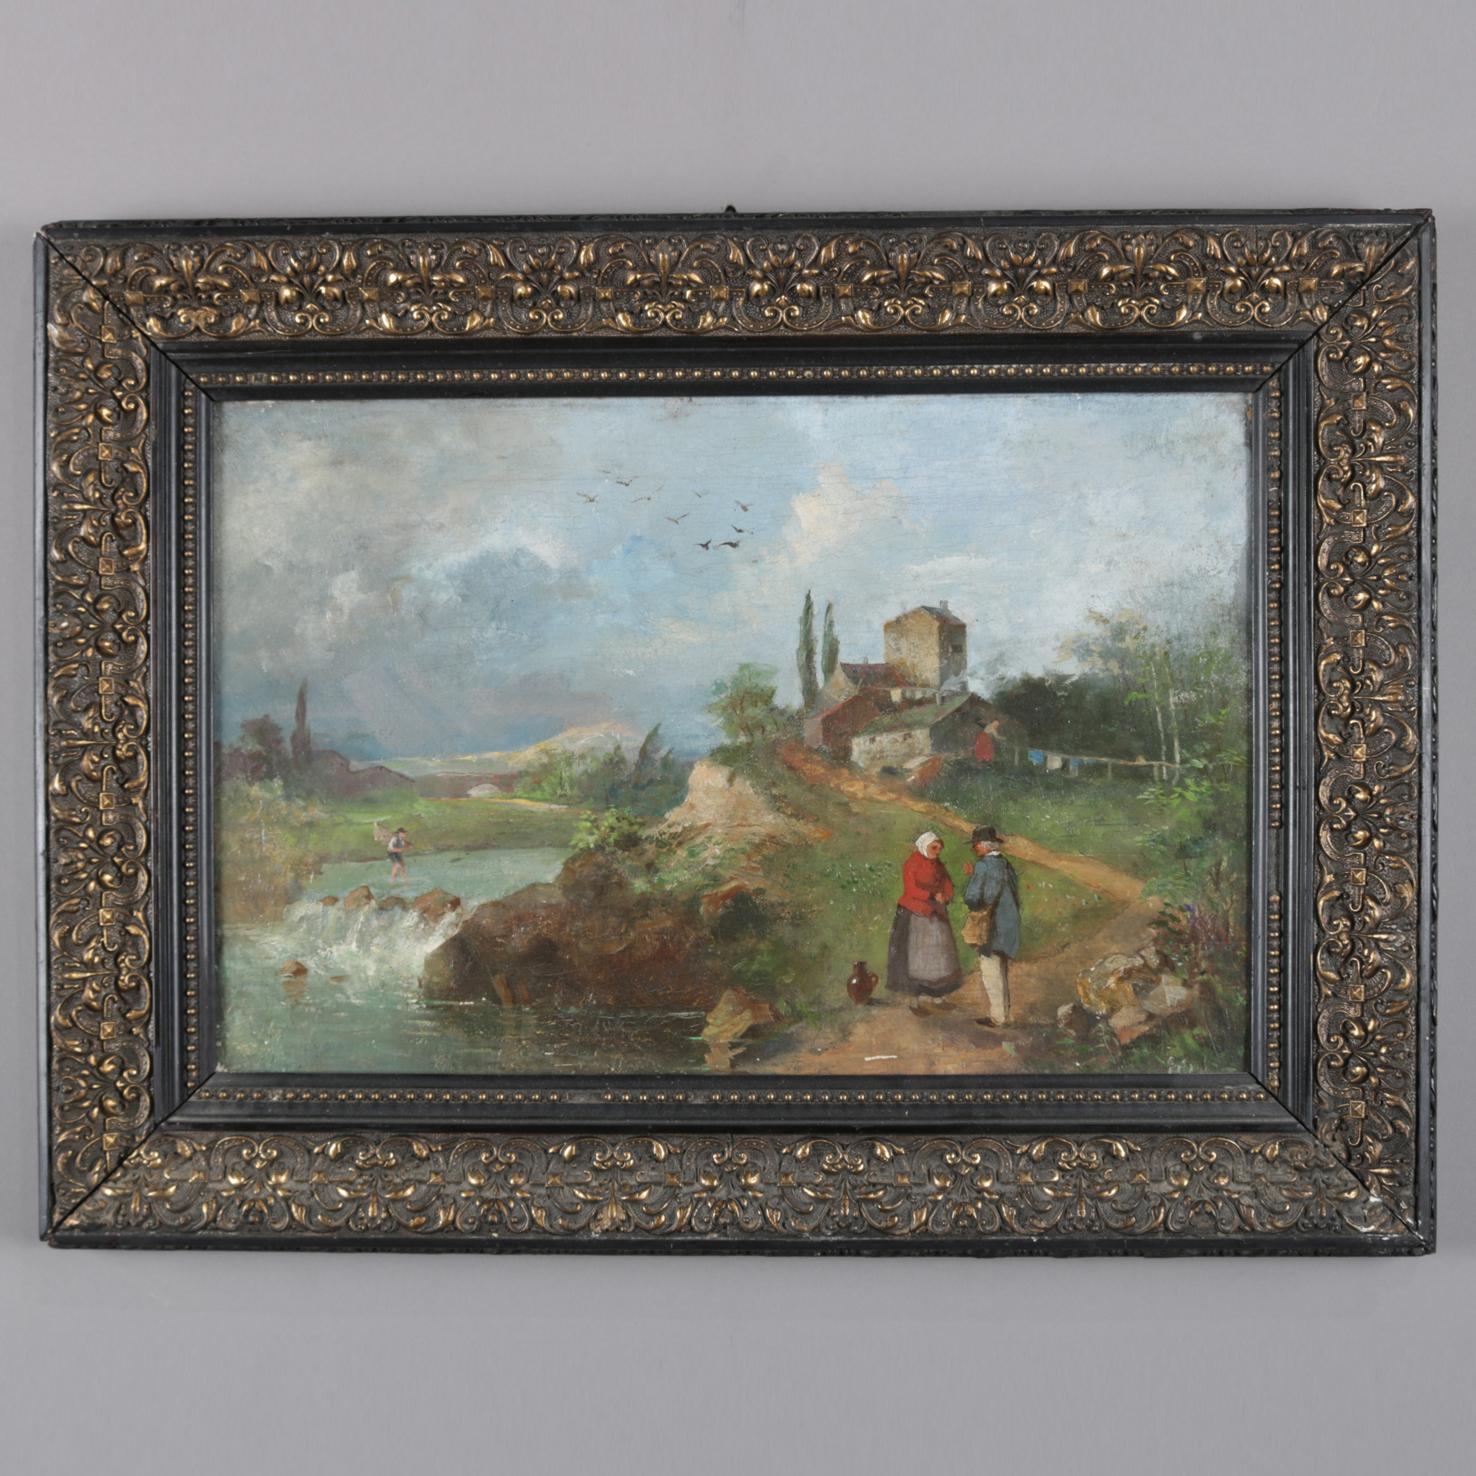 Antique Oil on Canvas Landscape Painting with Farm & Figures, 19th Century 8